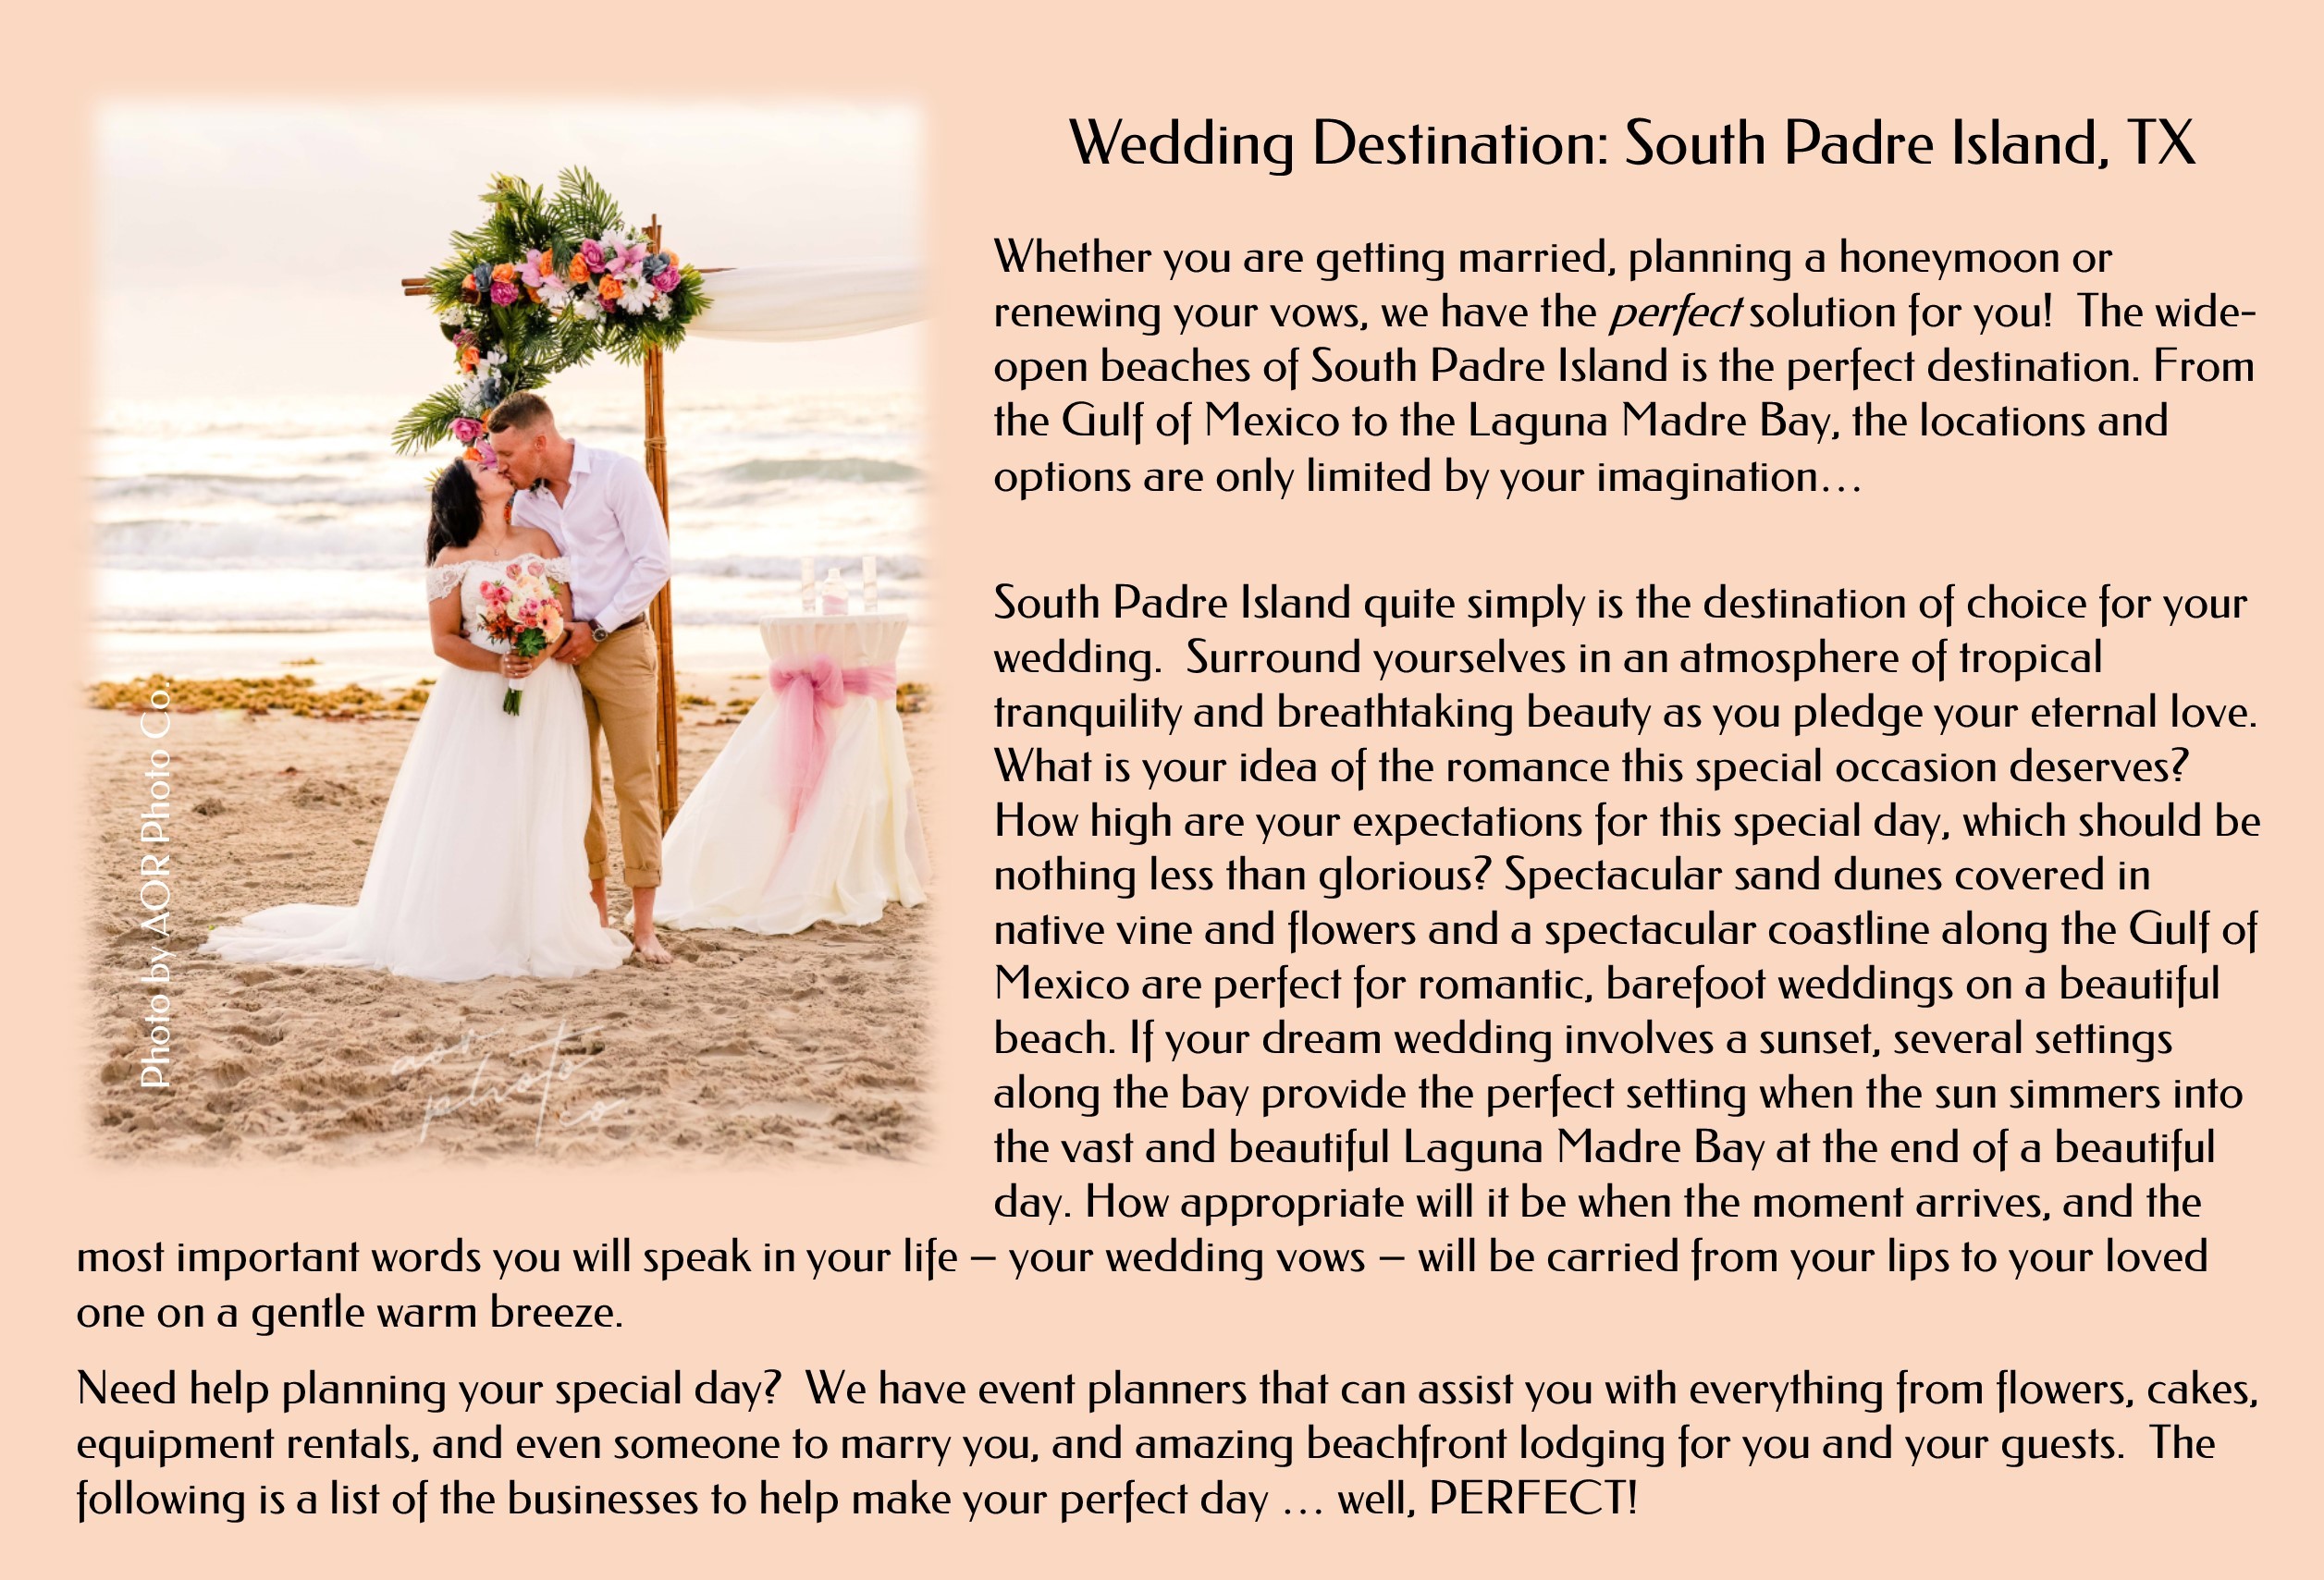 WeddingPromotionWebsite